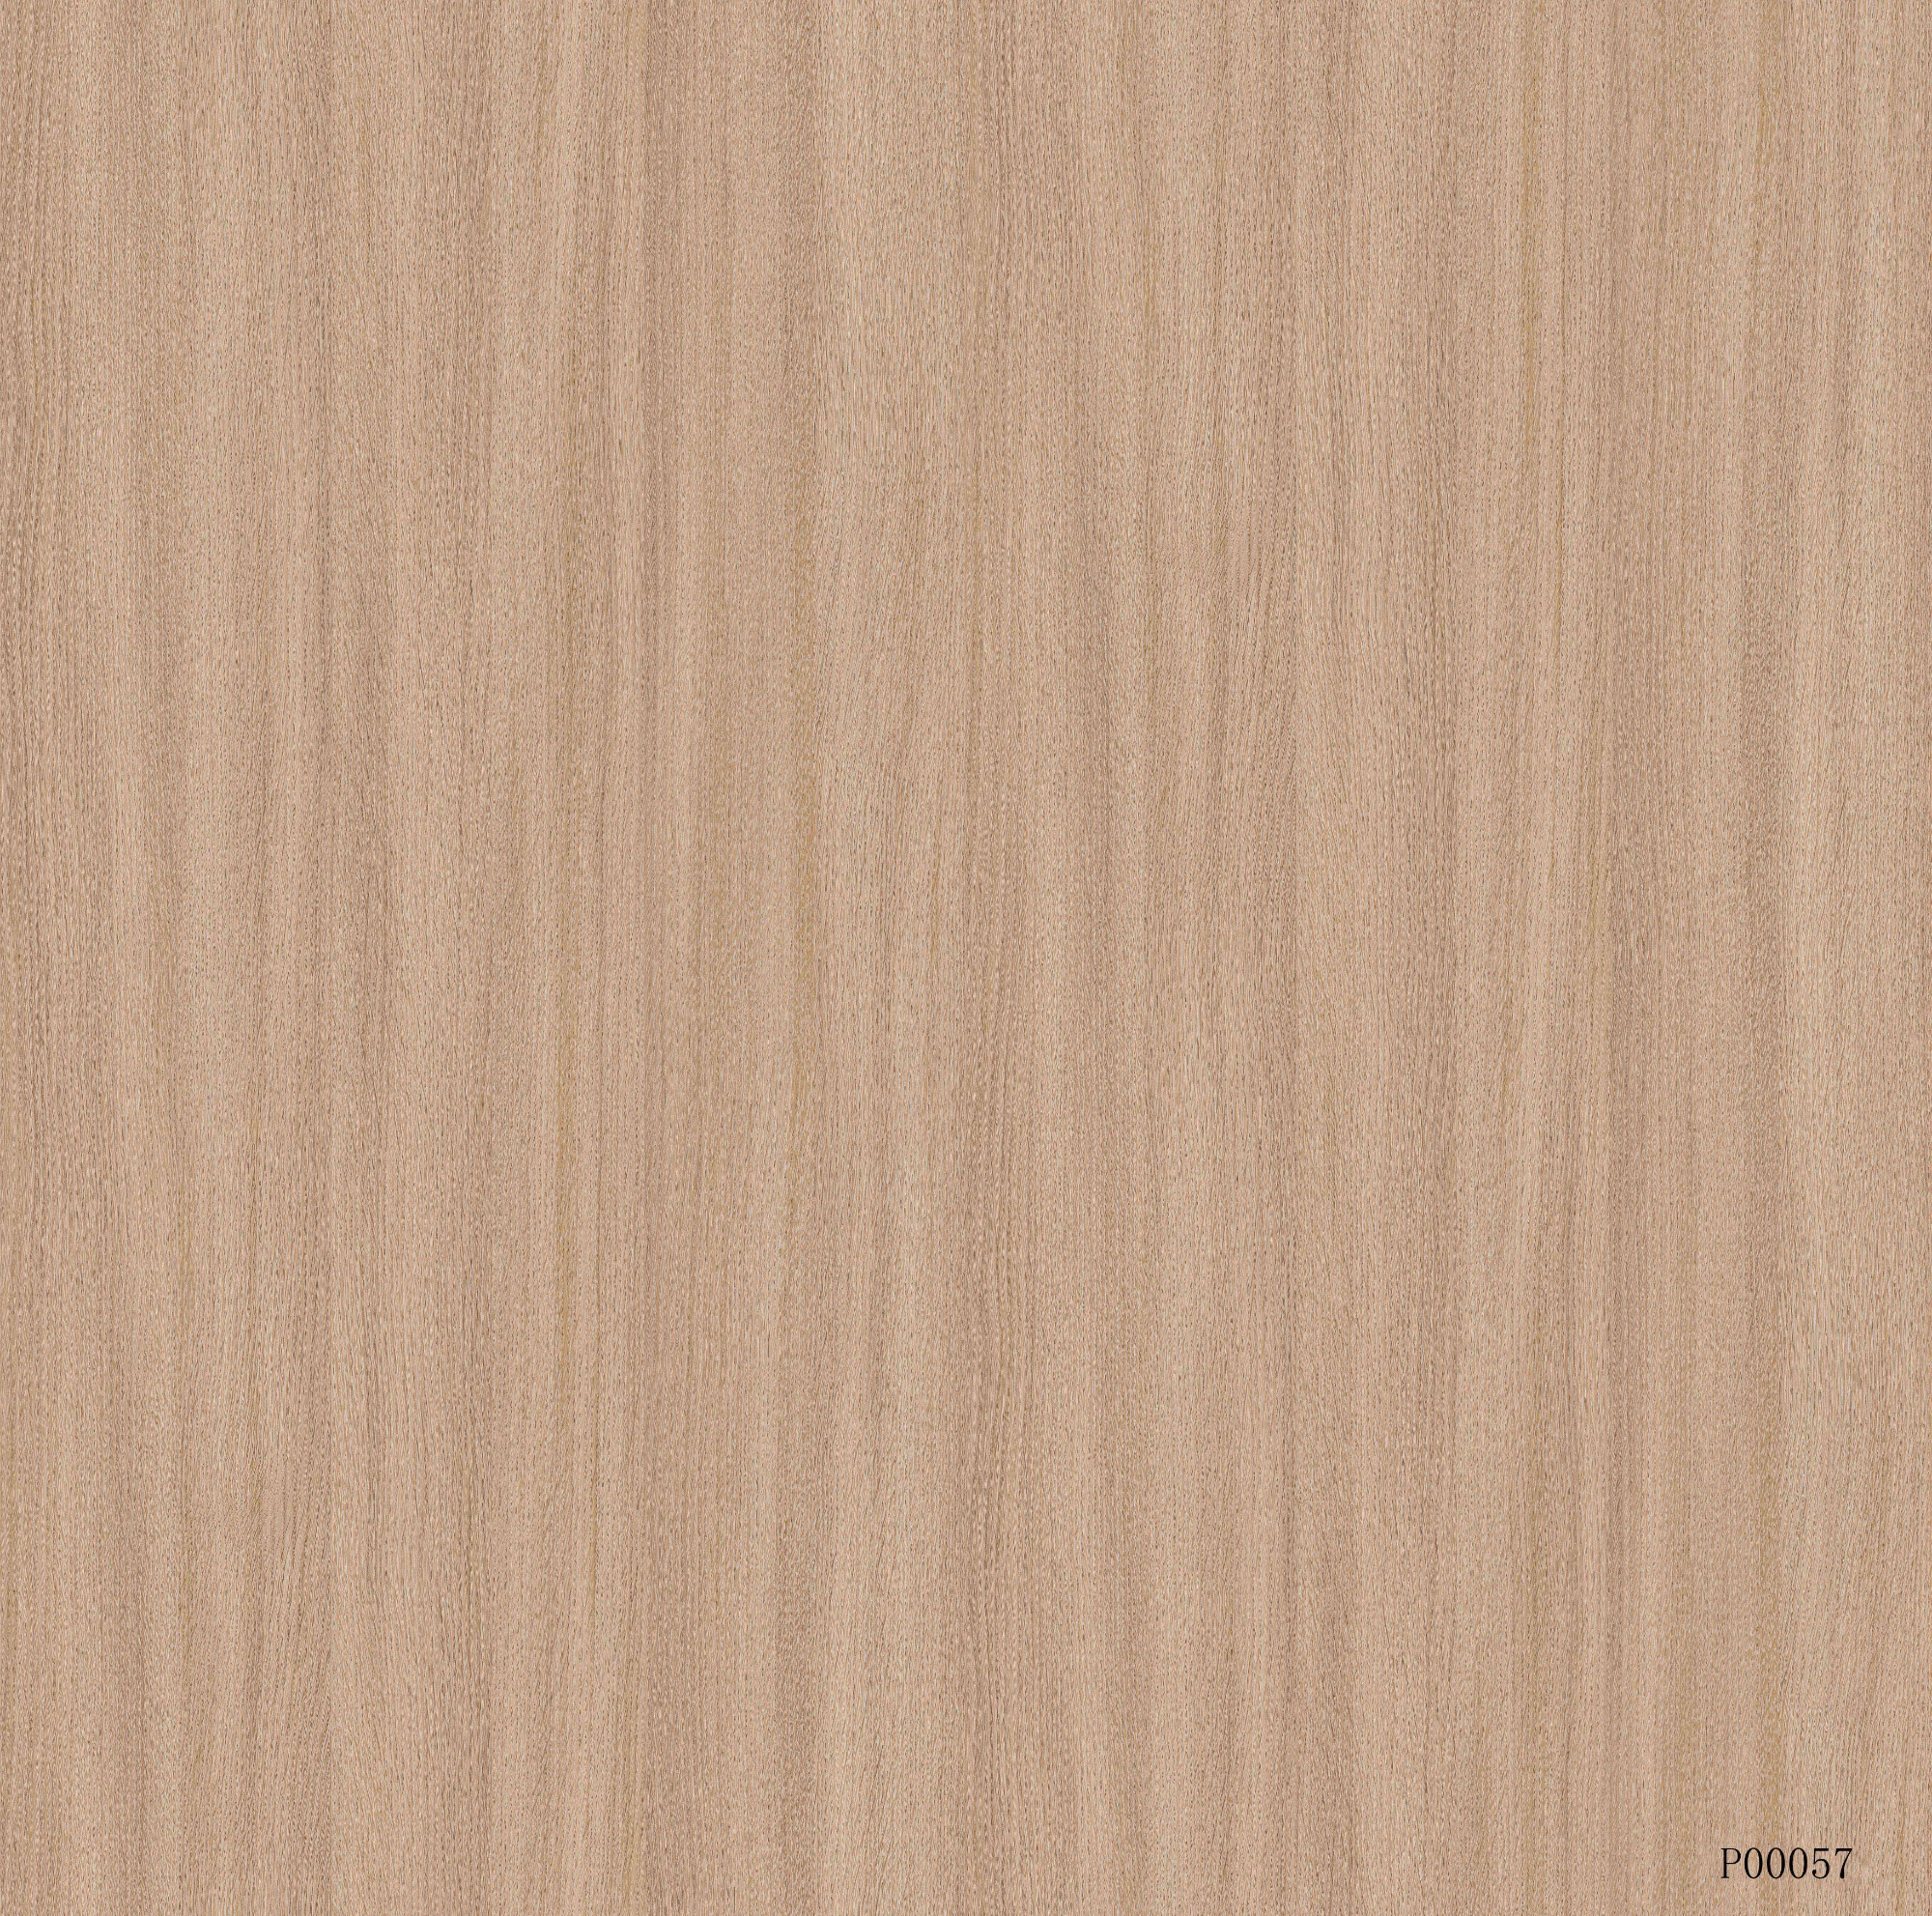 P00057 Melamine paper with wood grain